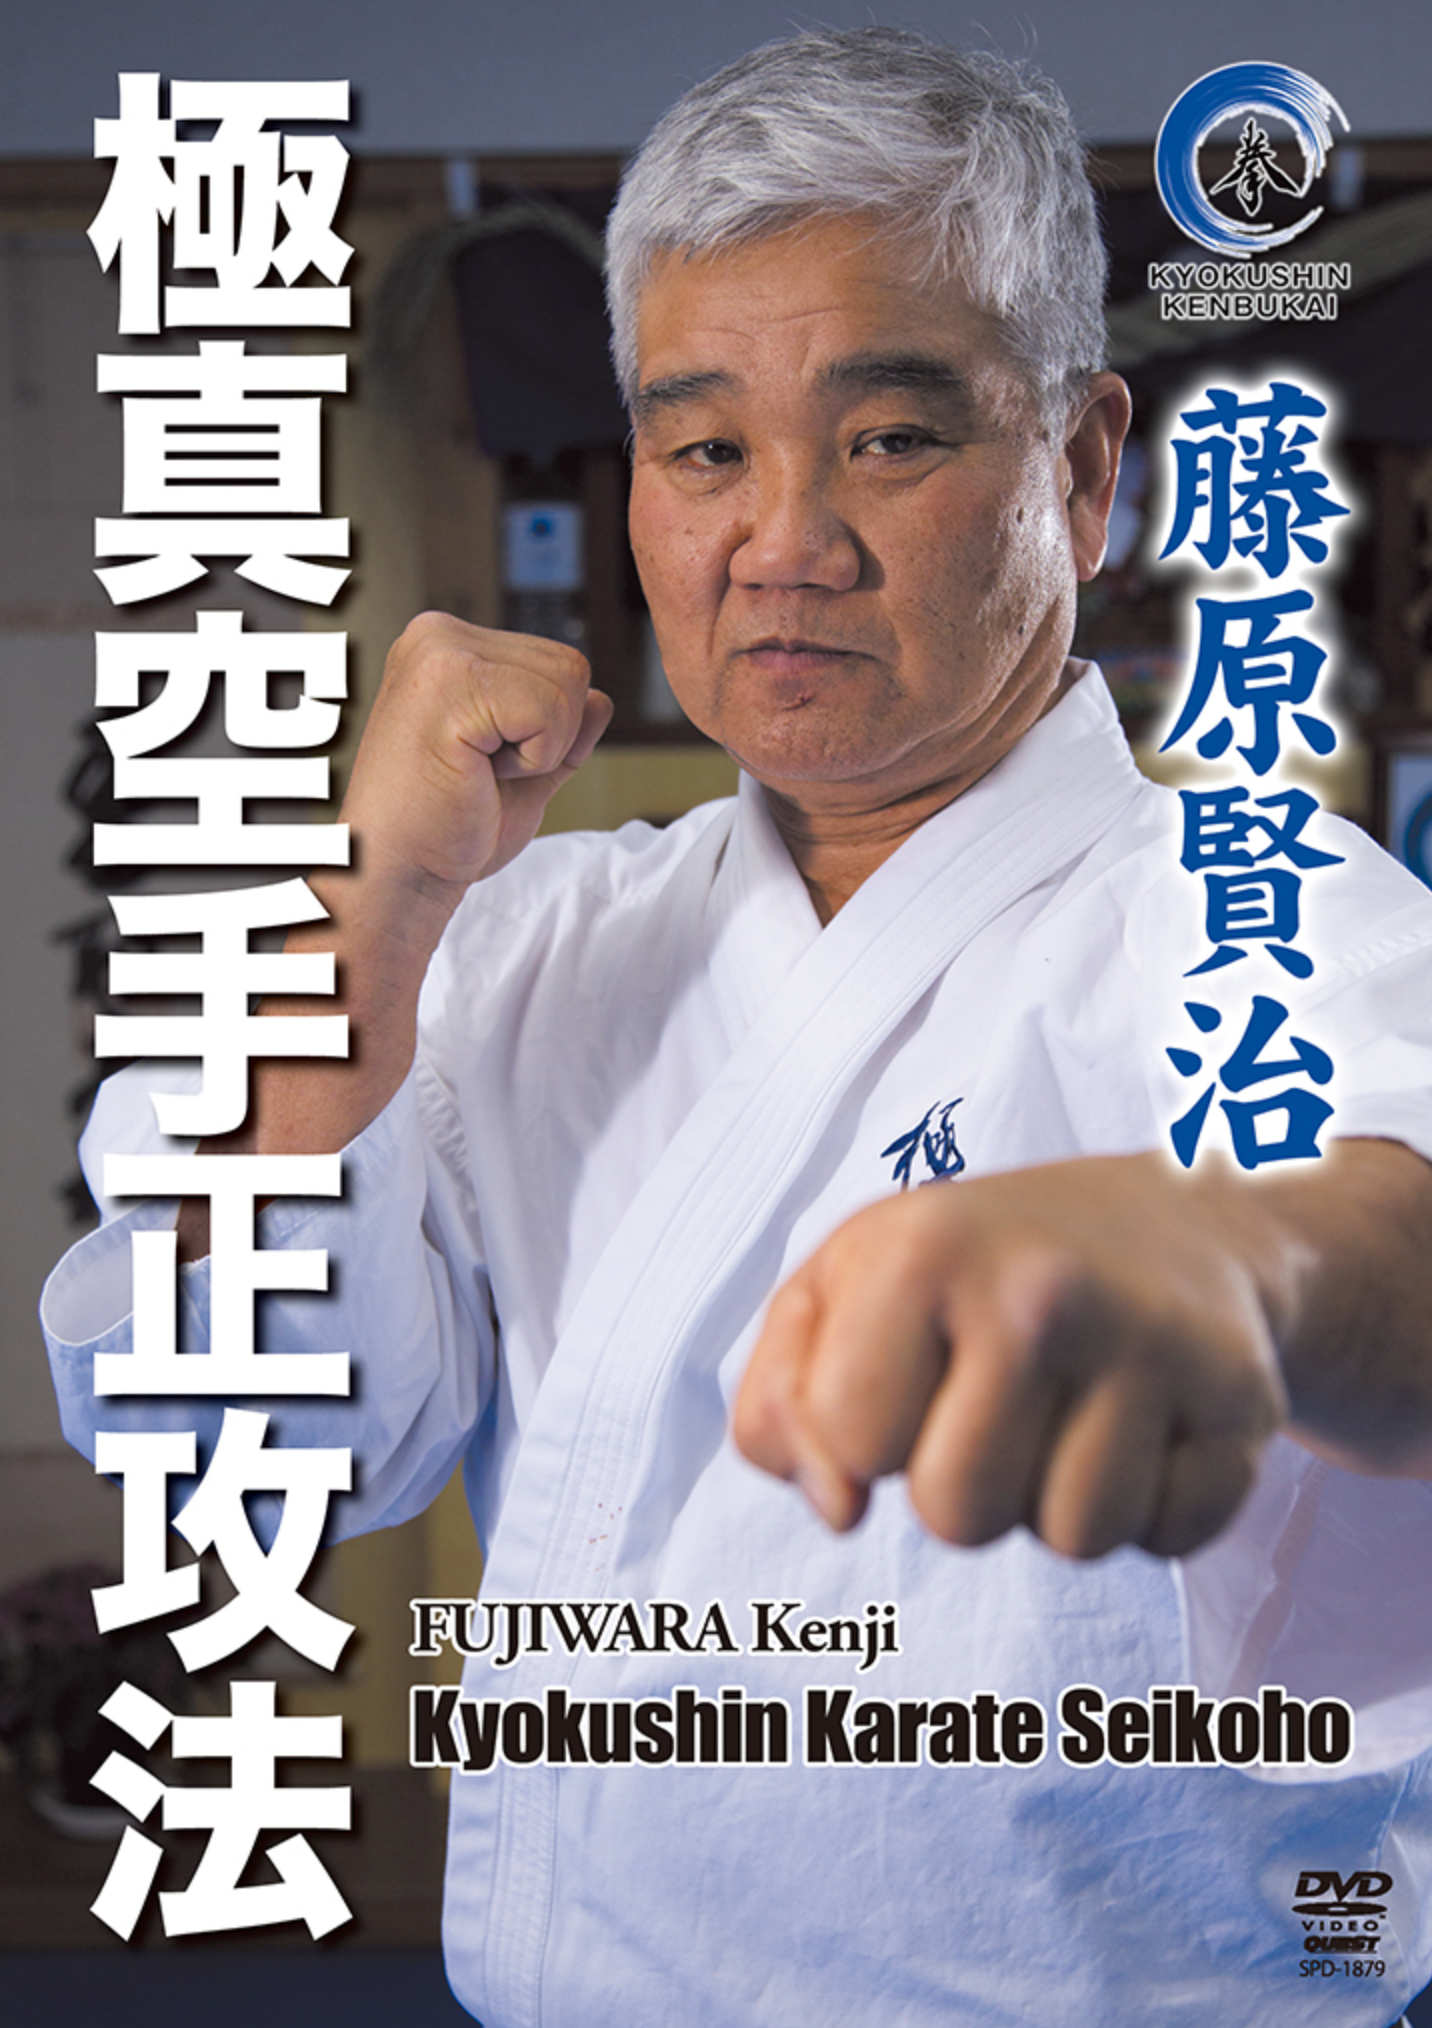 Kyokushin Karate Seikoho DVD with Kenji Fujiwara - Budovideos Inc